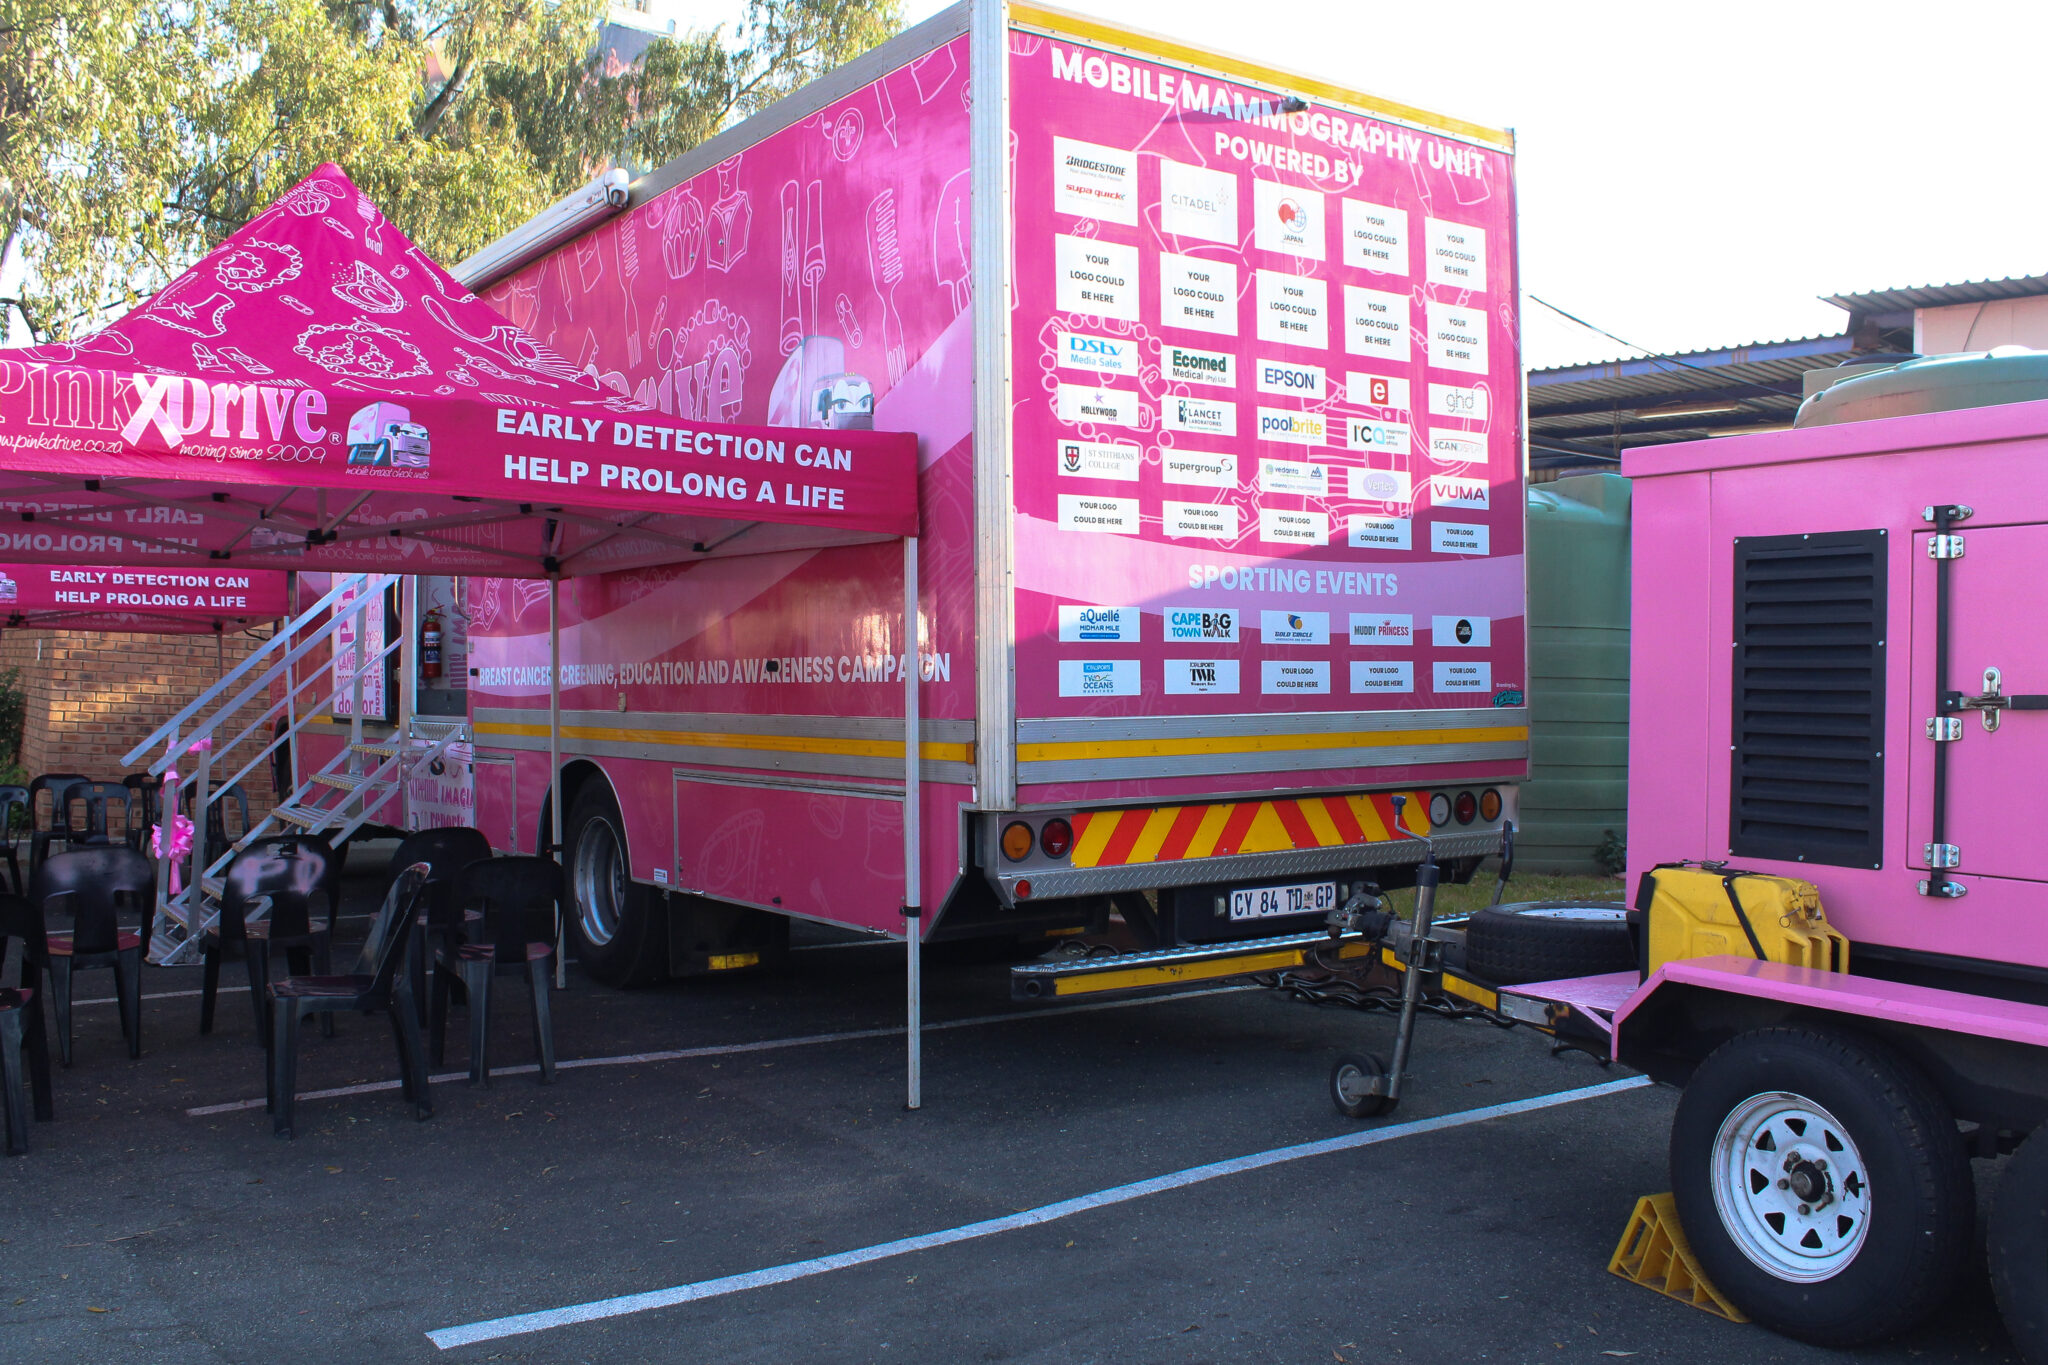 PinkDrive's Mobile Mammography Unit